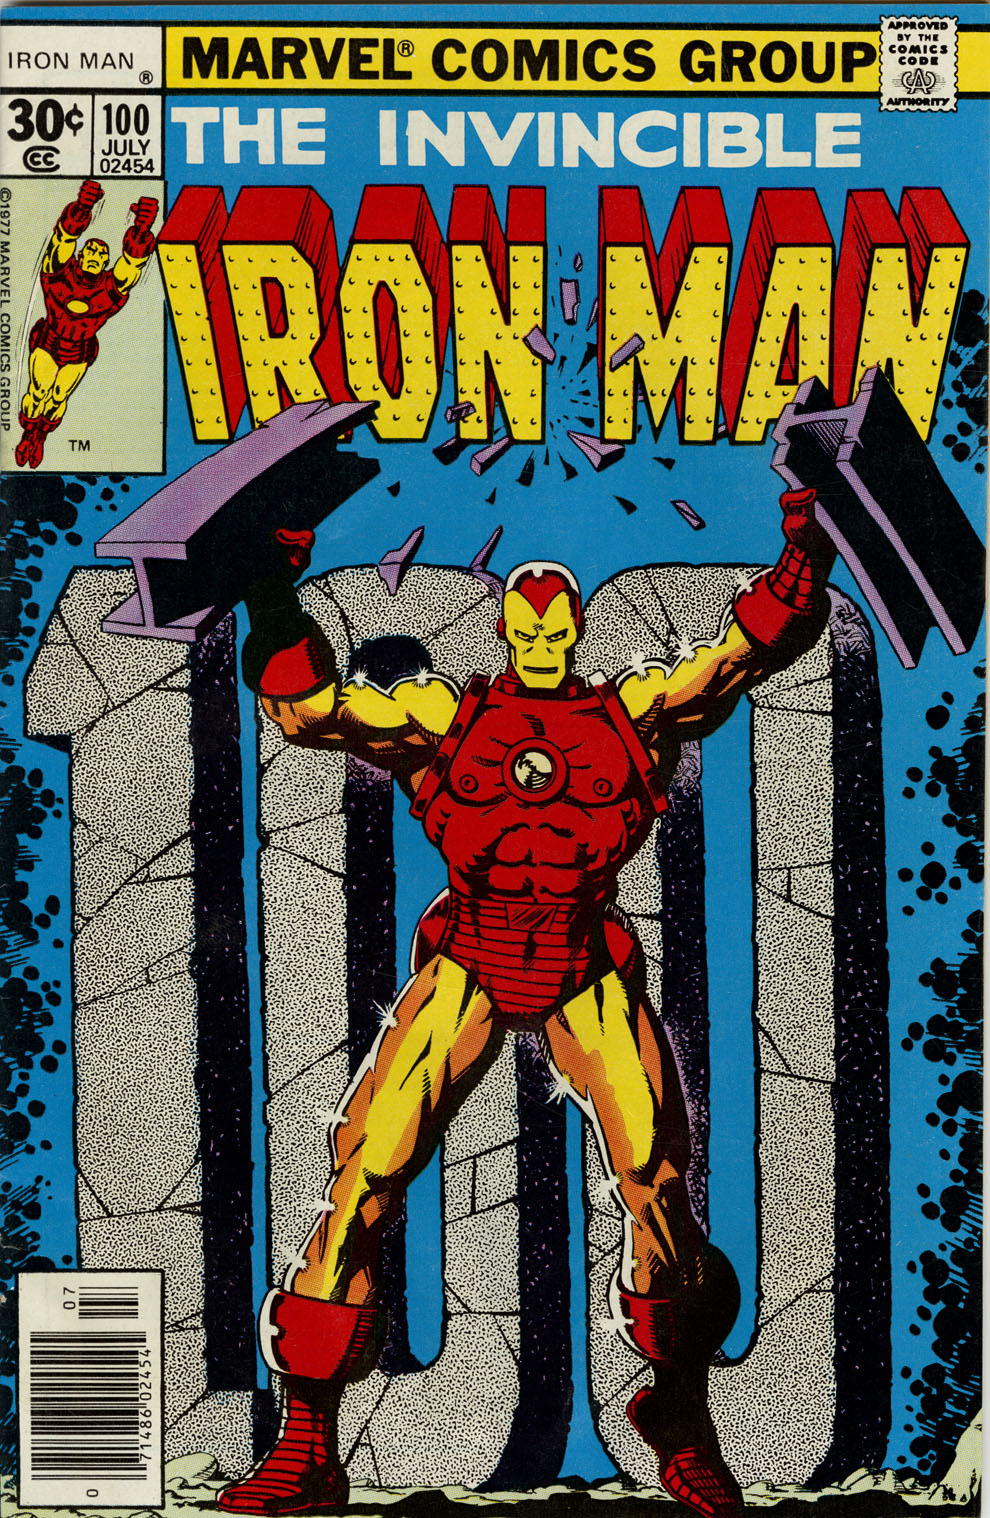 Iron_Man_100.jpg